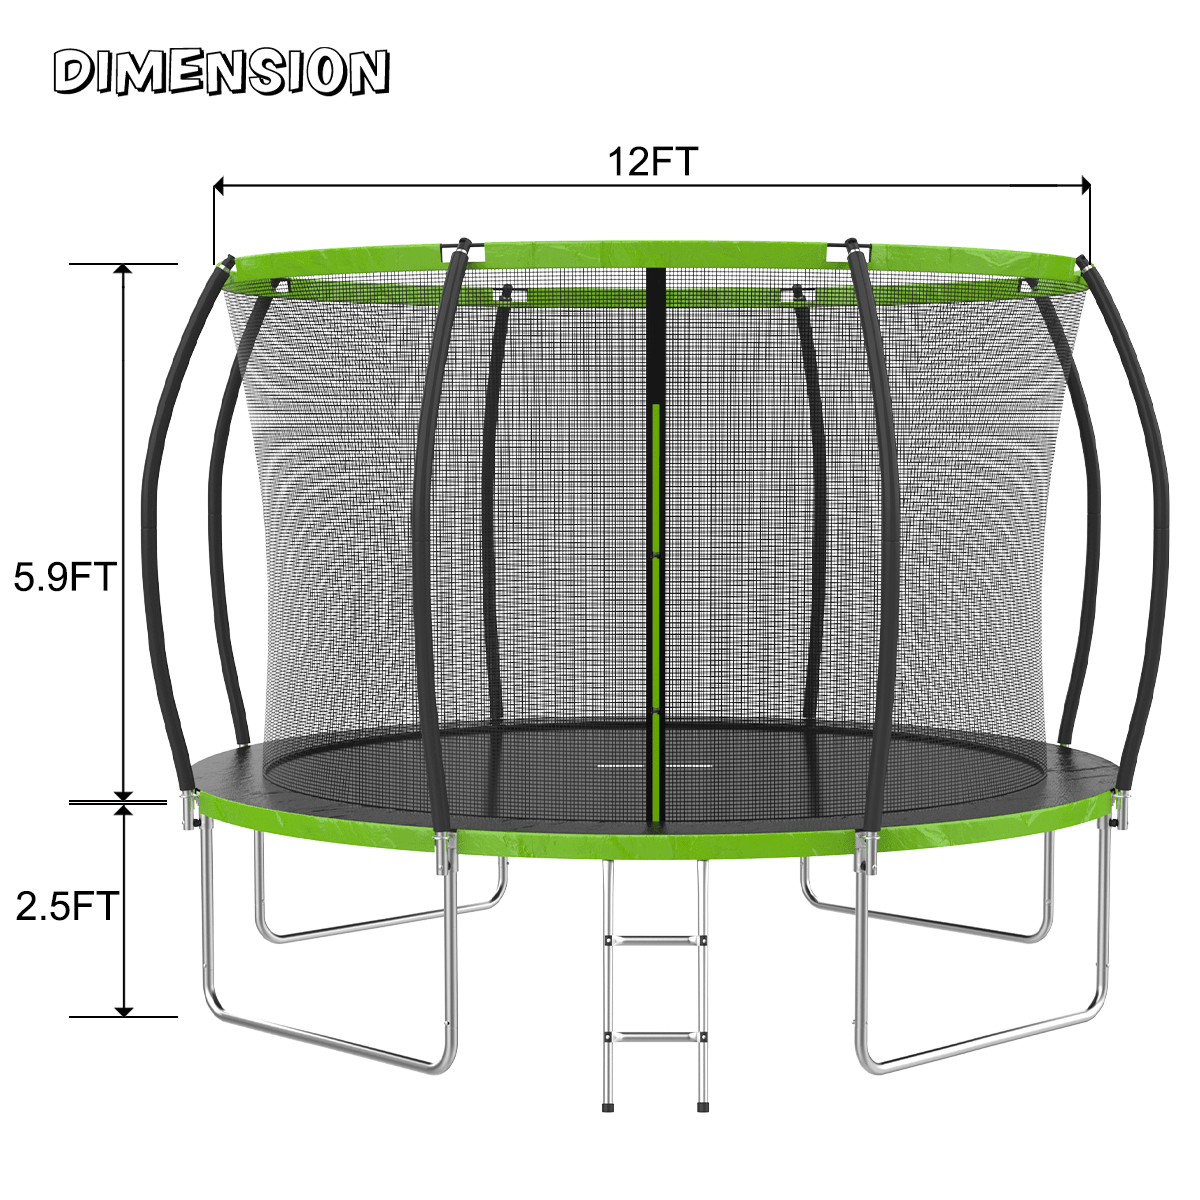 12ft trampoline size